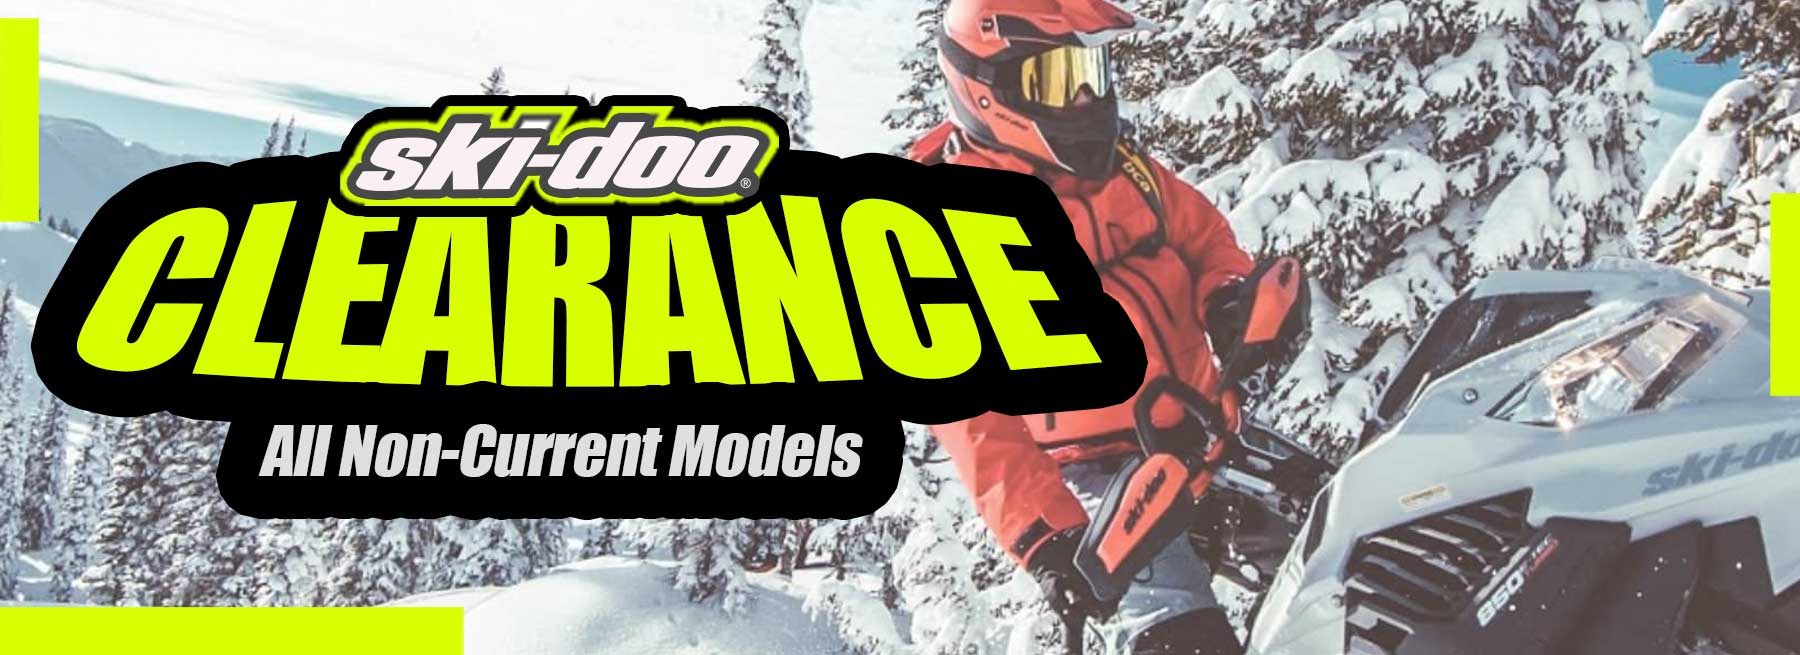 Leftover 2020 2021 Ski-doo snowmobile deals